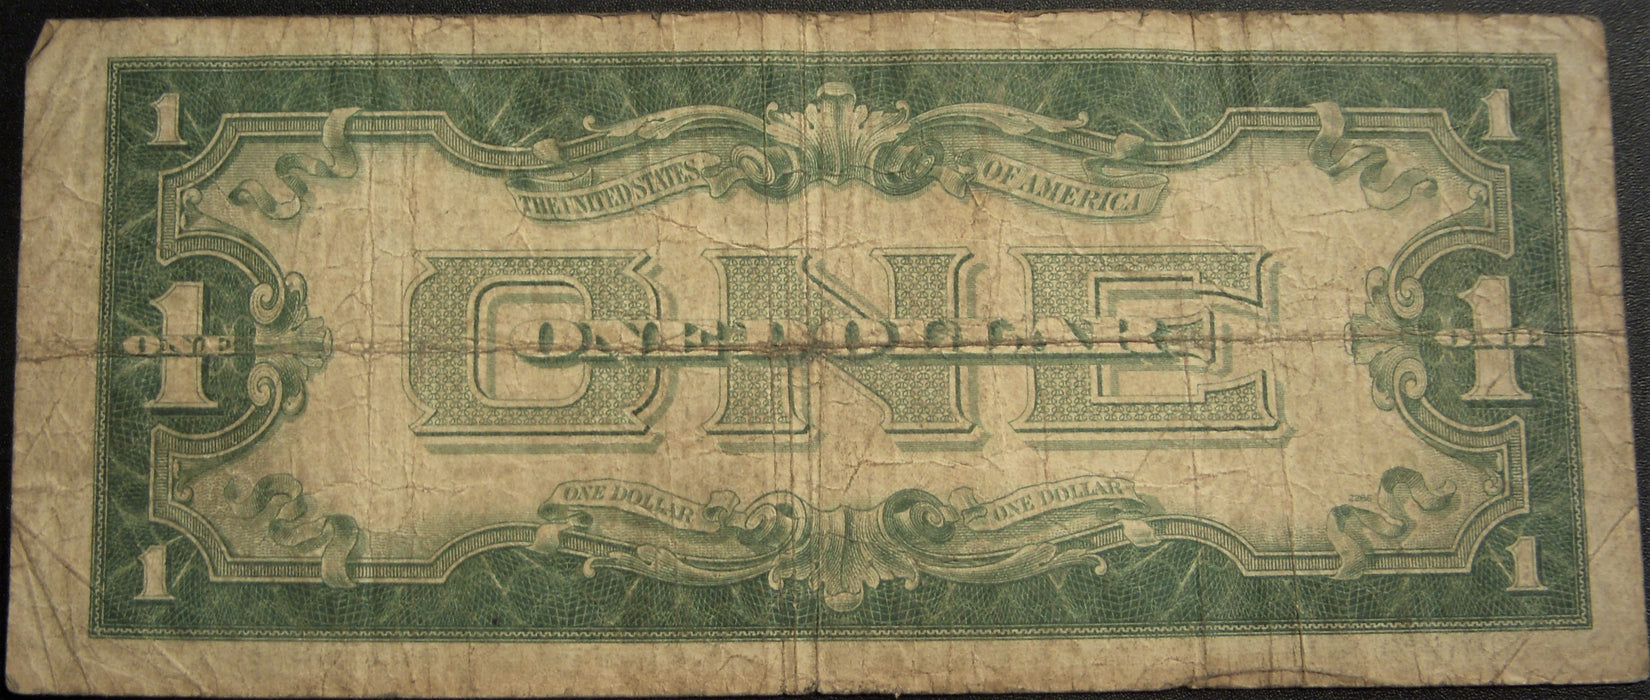 1928B $1 Silver Certificate Note - FR# 1602